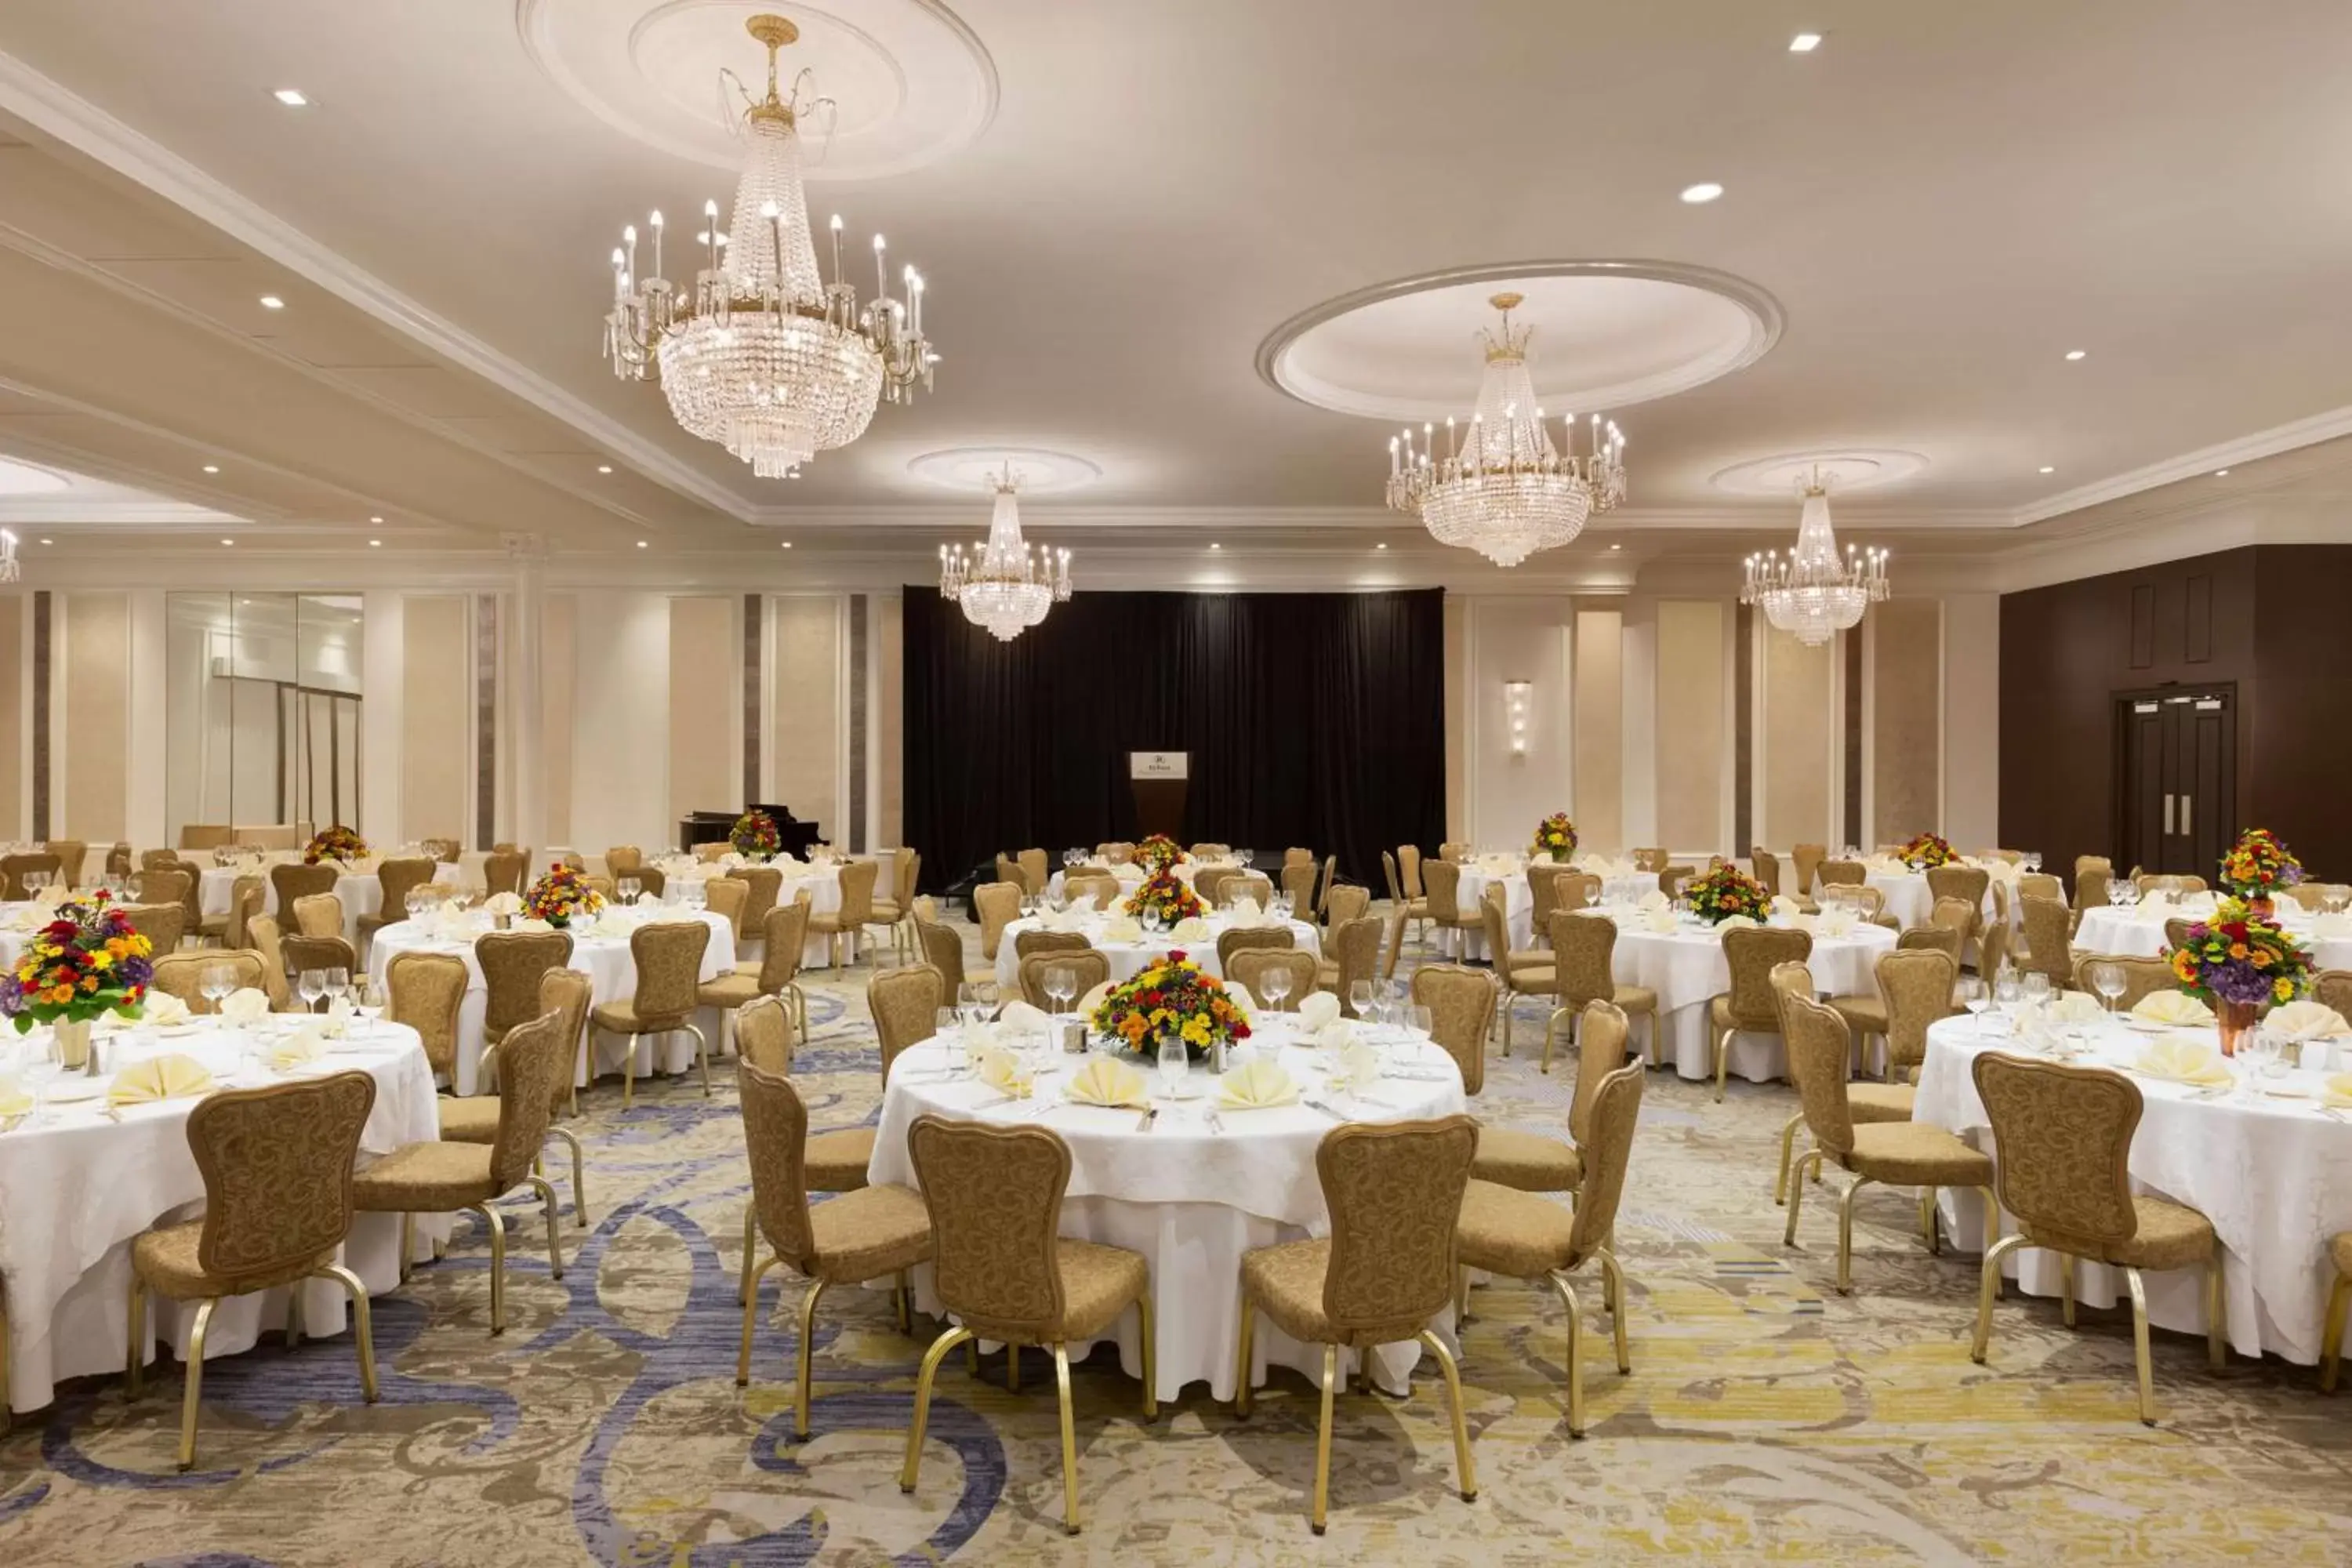 Meeting/conference room, Banquet Facilities in Hilton Philadelphia City Avenue